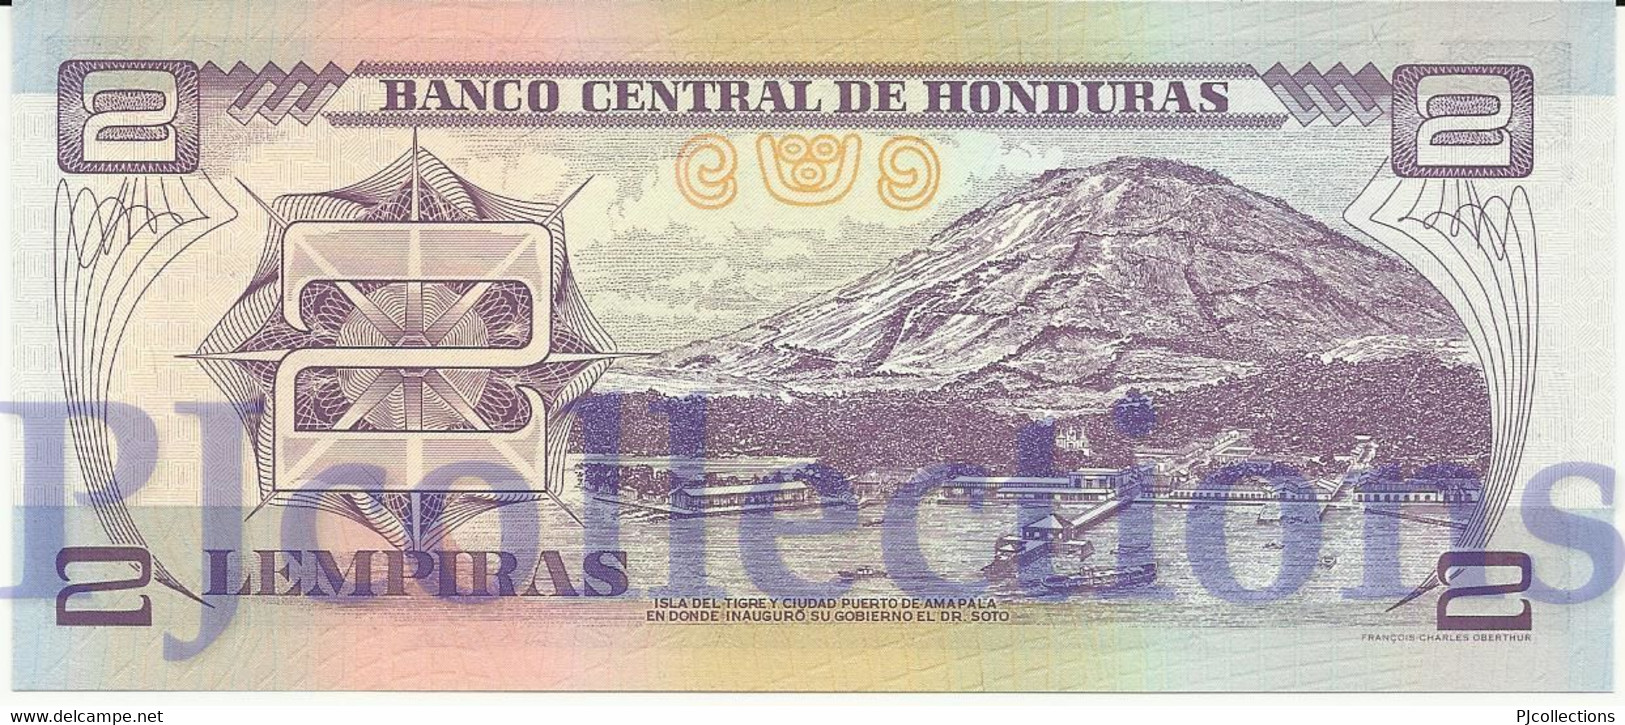 HONDURAS 2 LEMPIRAS 2003 PICK 80Ad UNC - Honduras